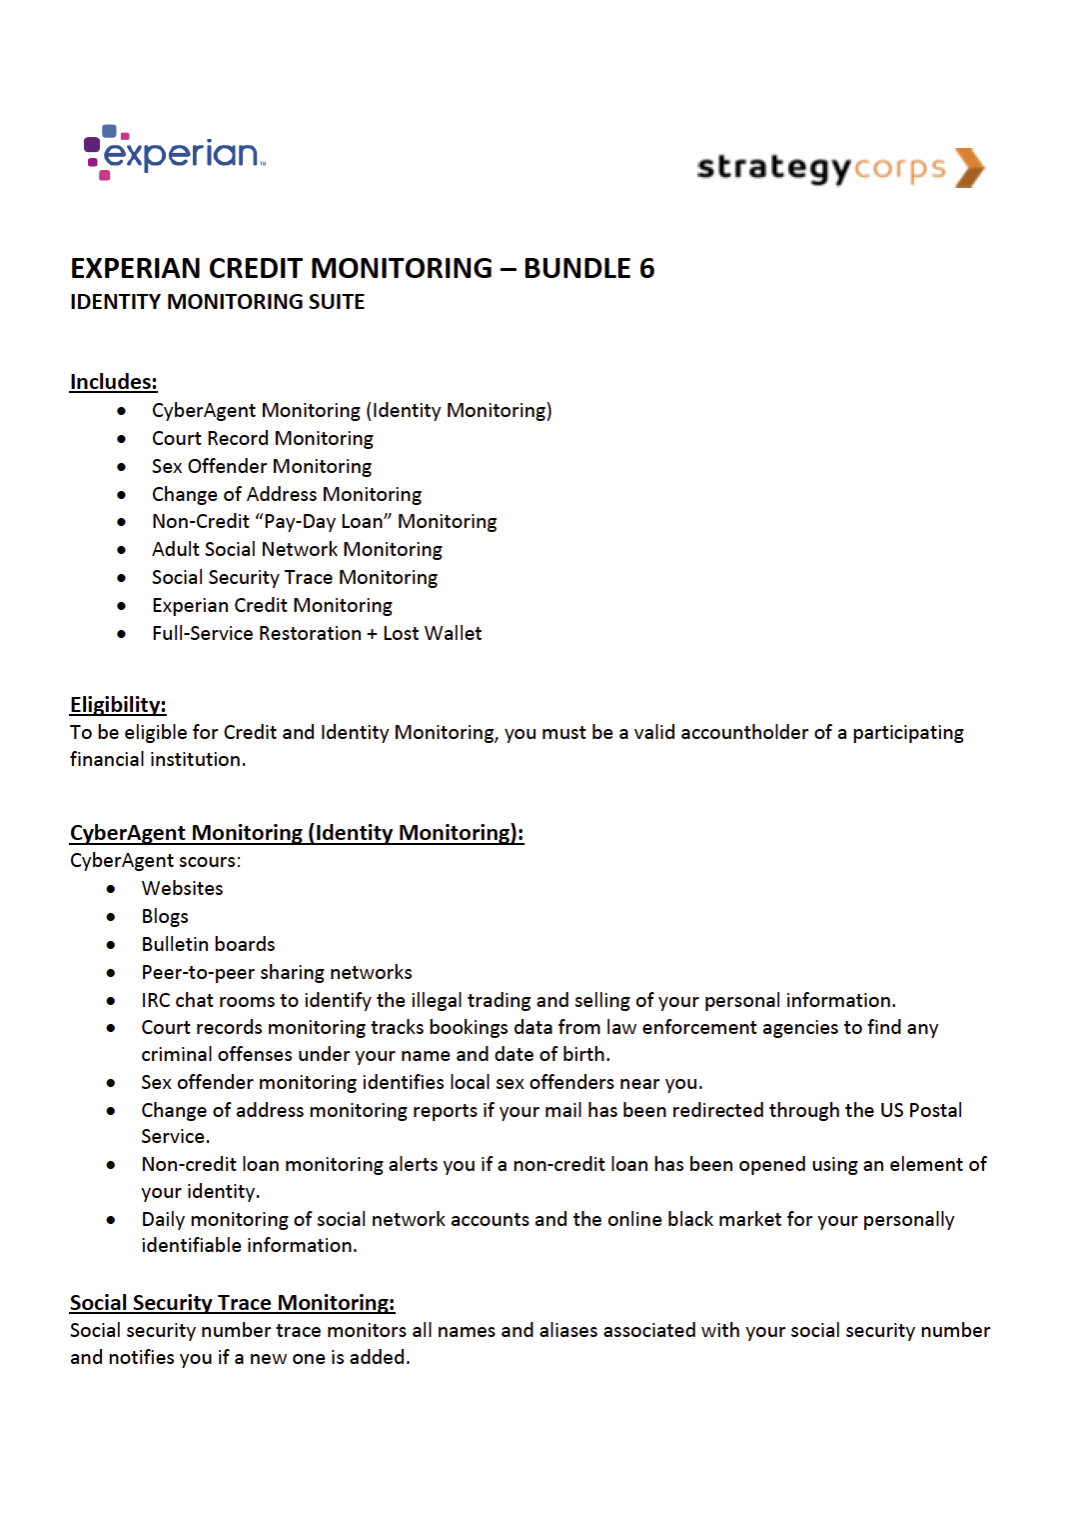 Experian Credit & Identity Monitoring - Bundle 6